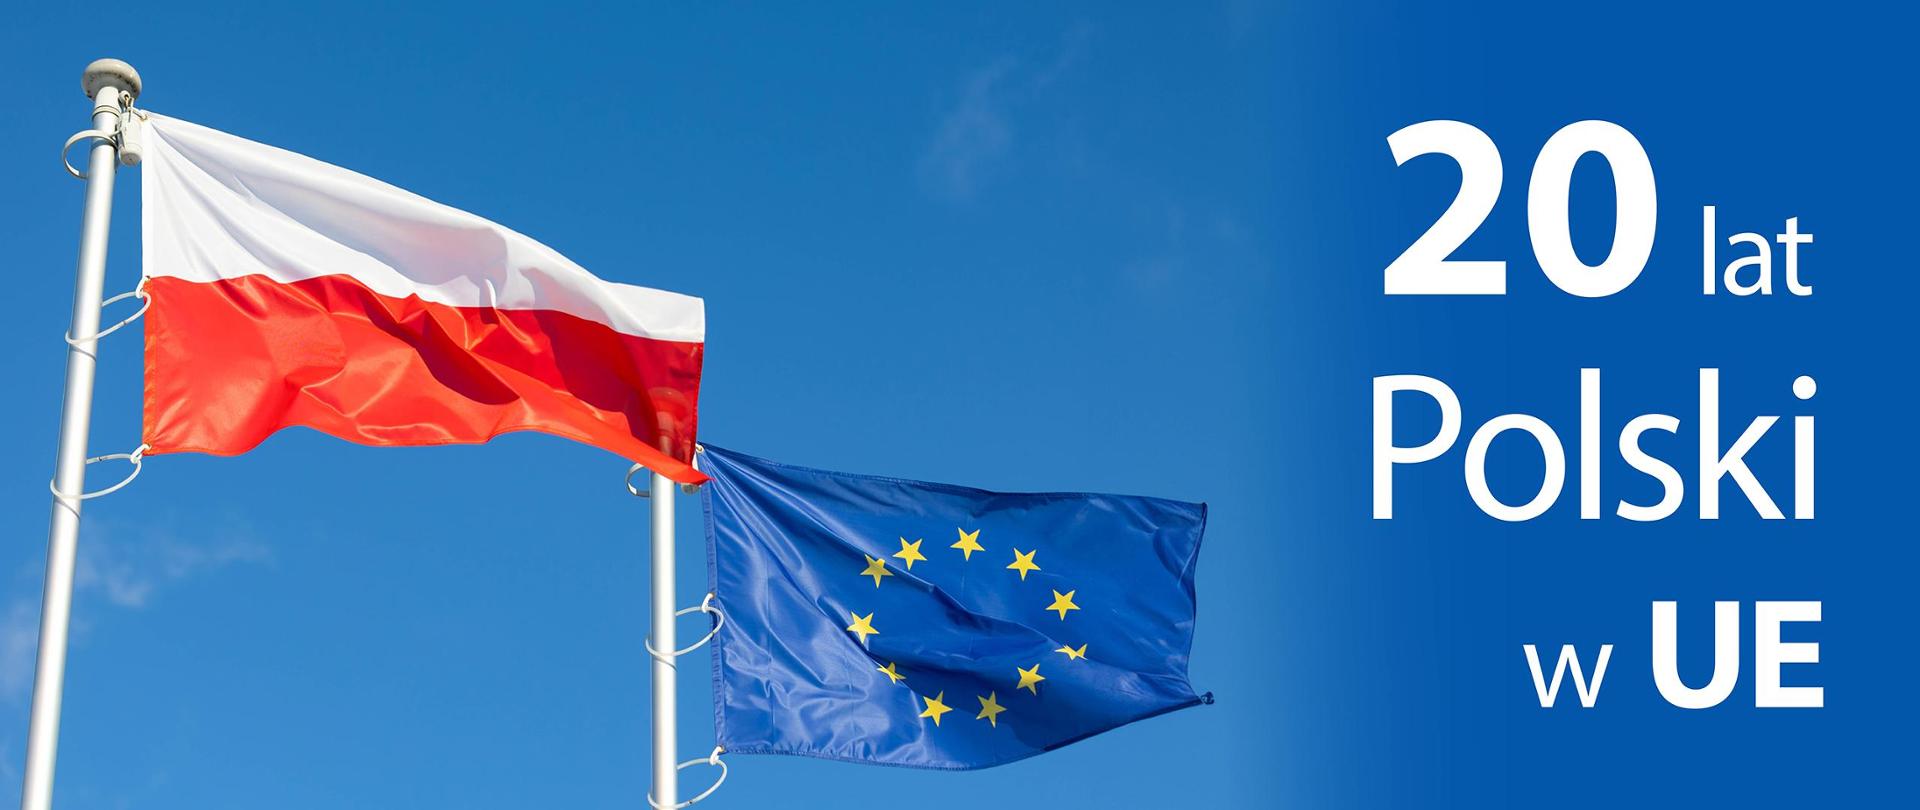 Flagi Polski i Unii